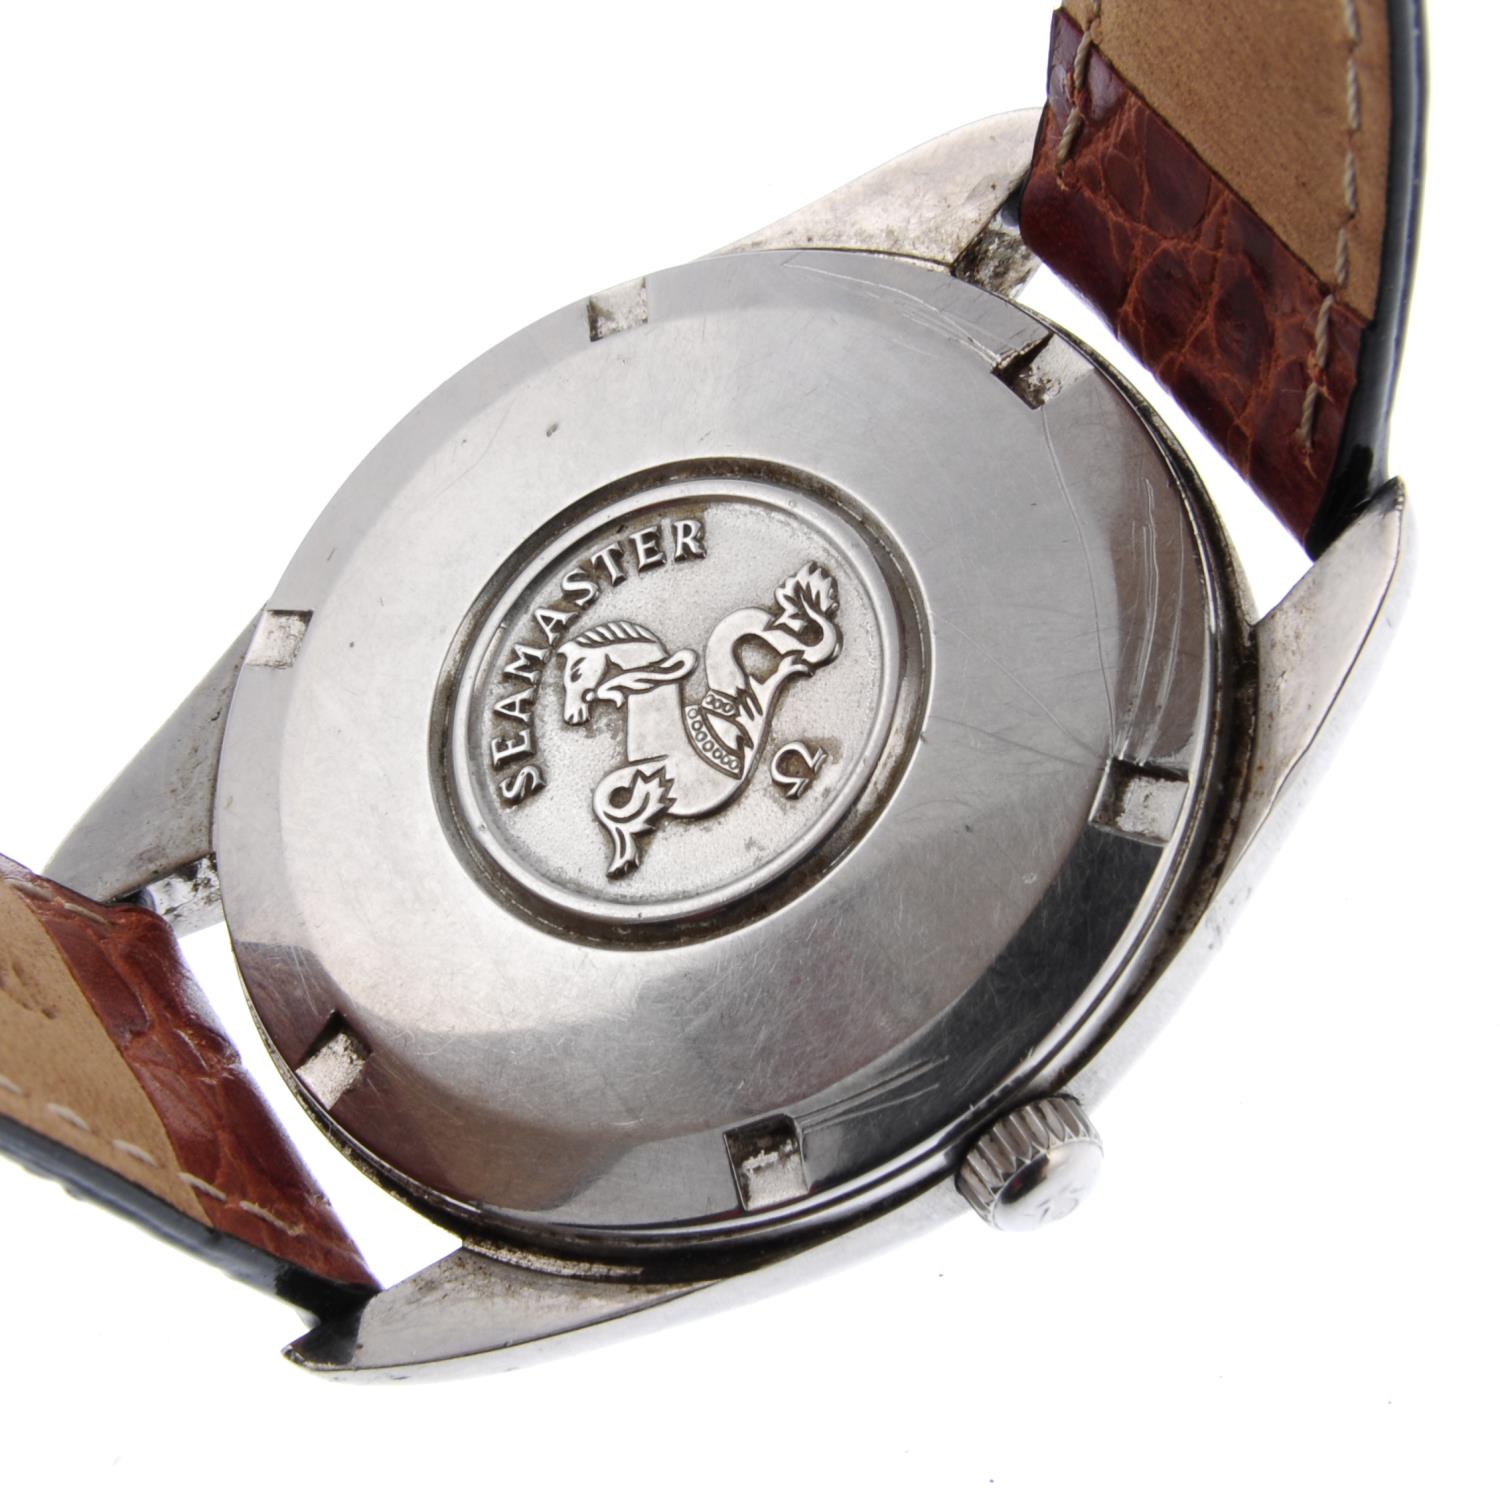 OMEGA - a gentleman's Seamaster wrist watch. - Image 3 of 4